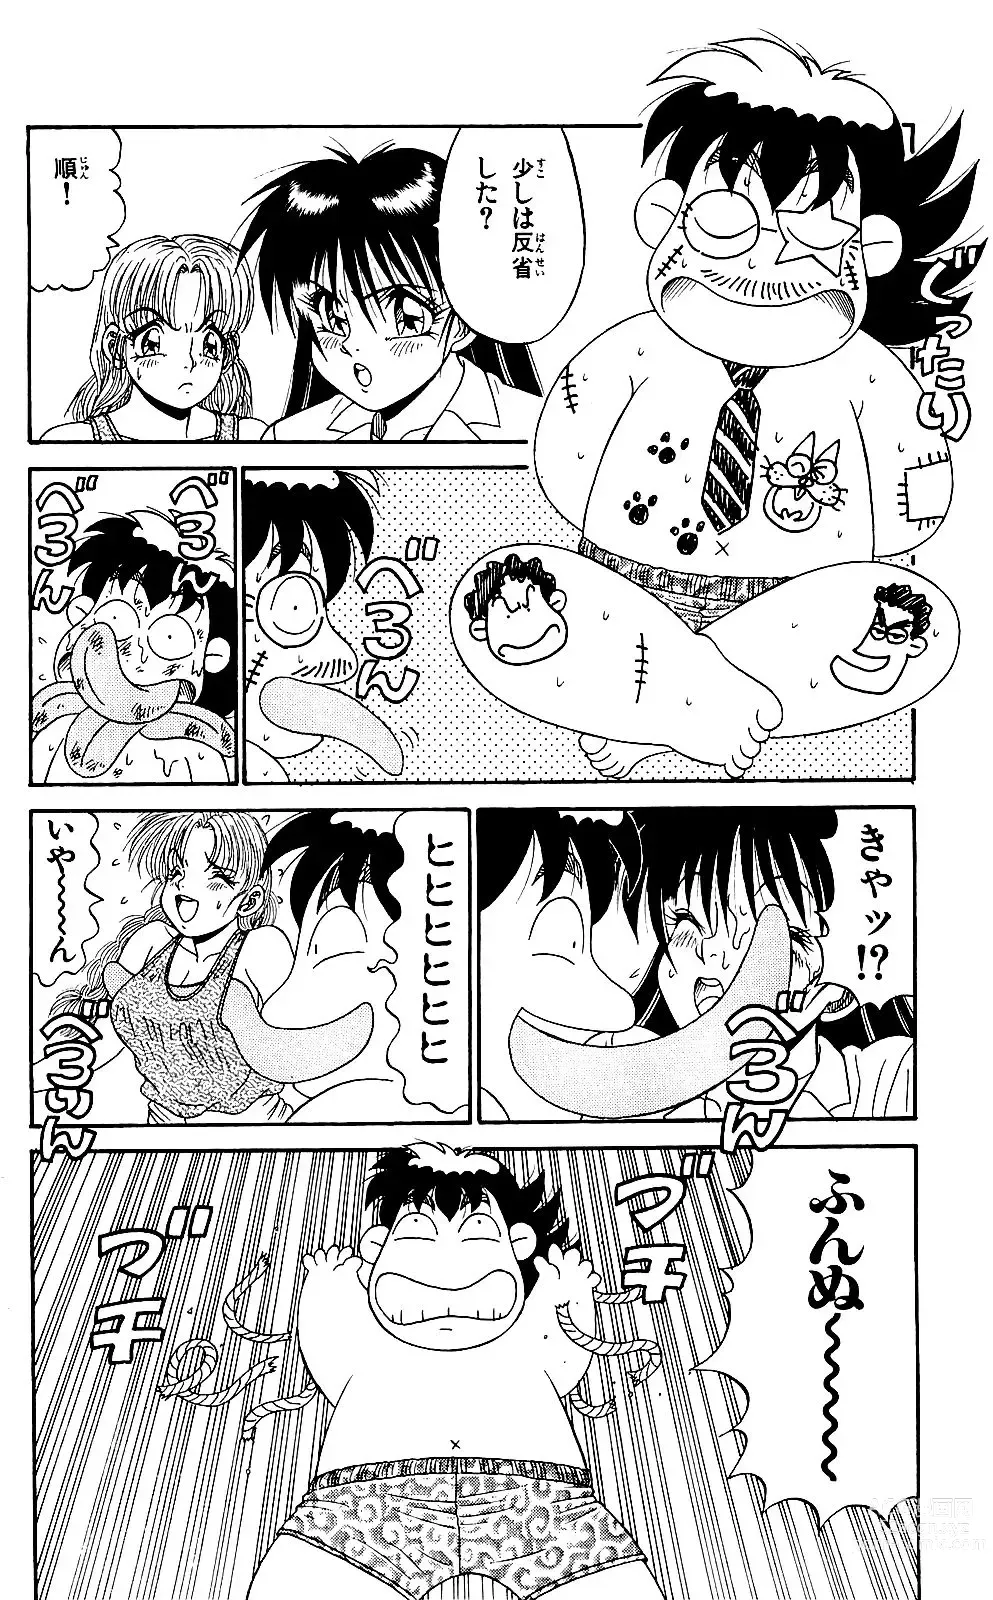 Page 190 of manga Orette Piyoritan 05